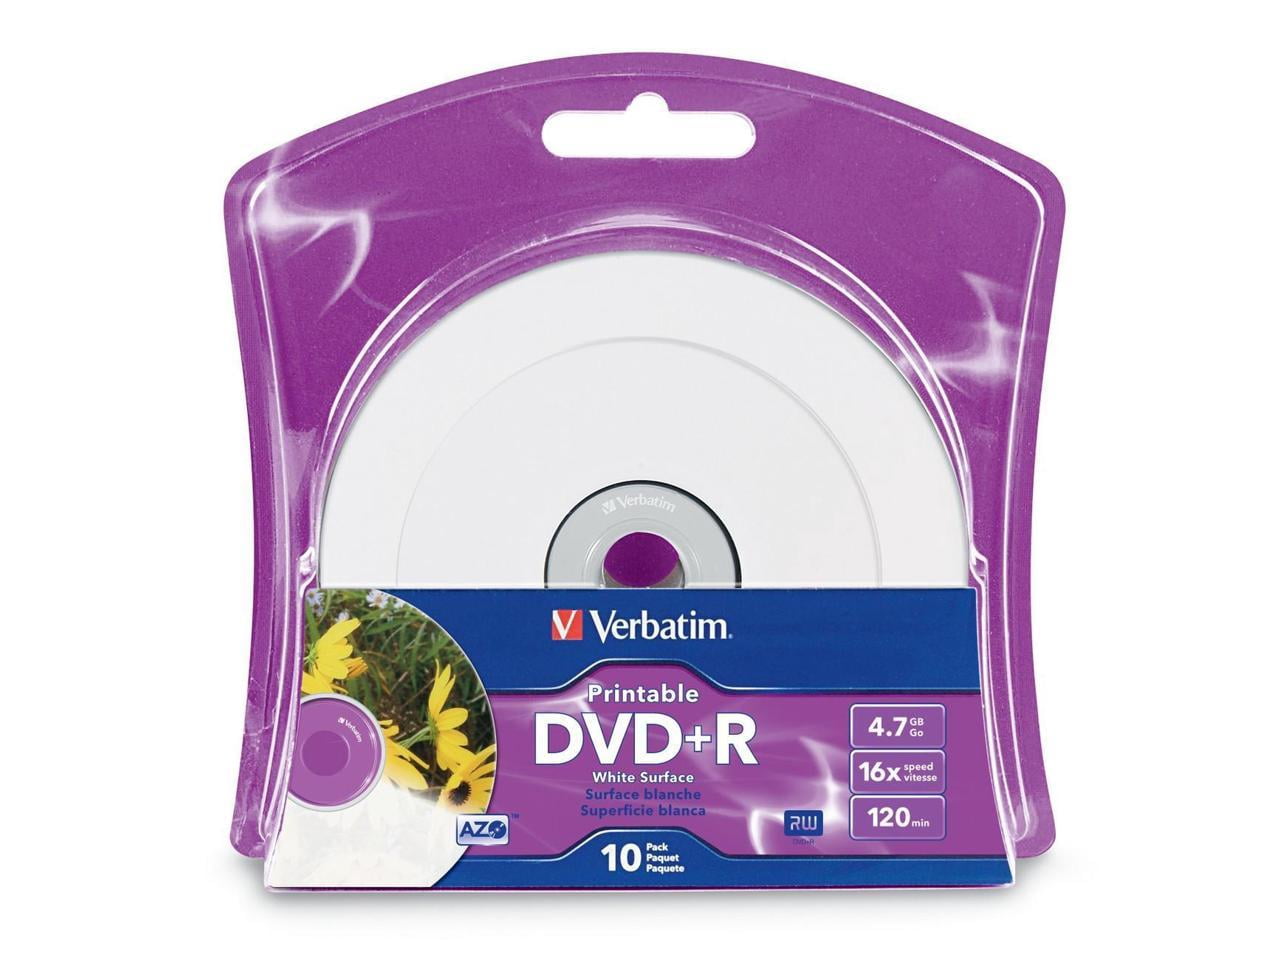 Dvd vierge 43498 dvd+r sp10 datalife+ 16x Verbatim